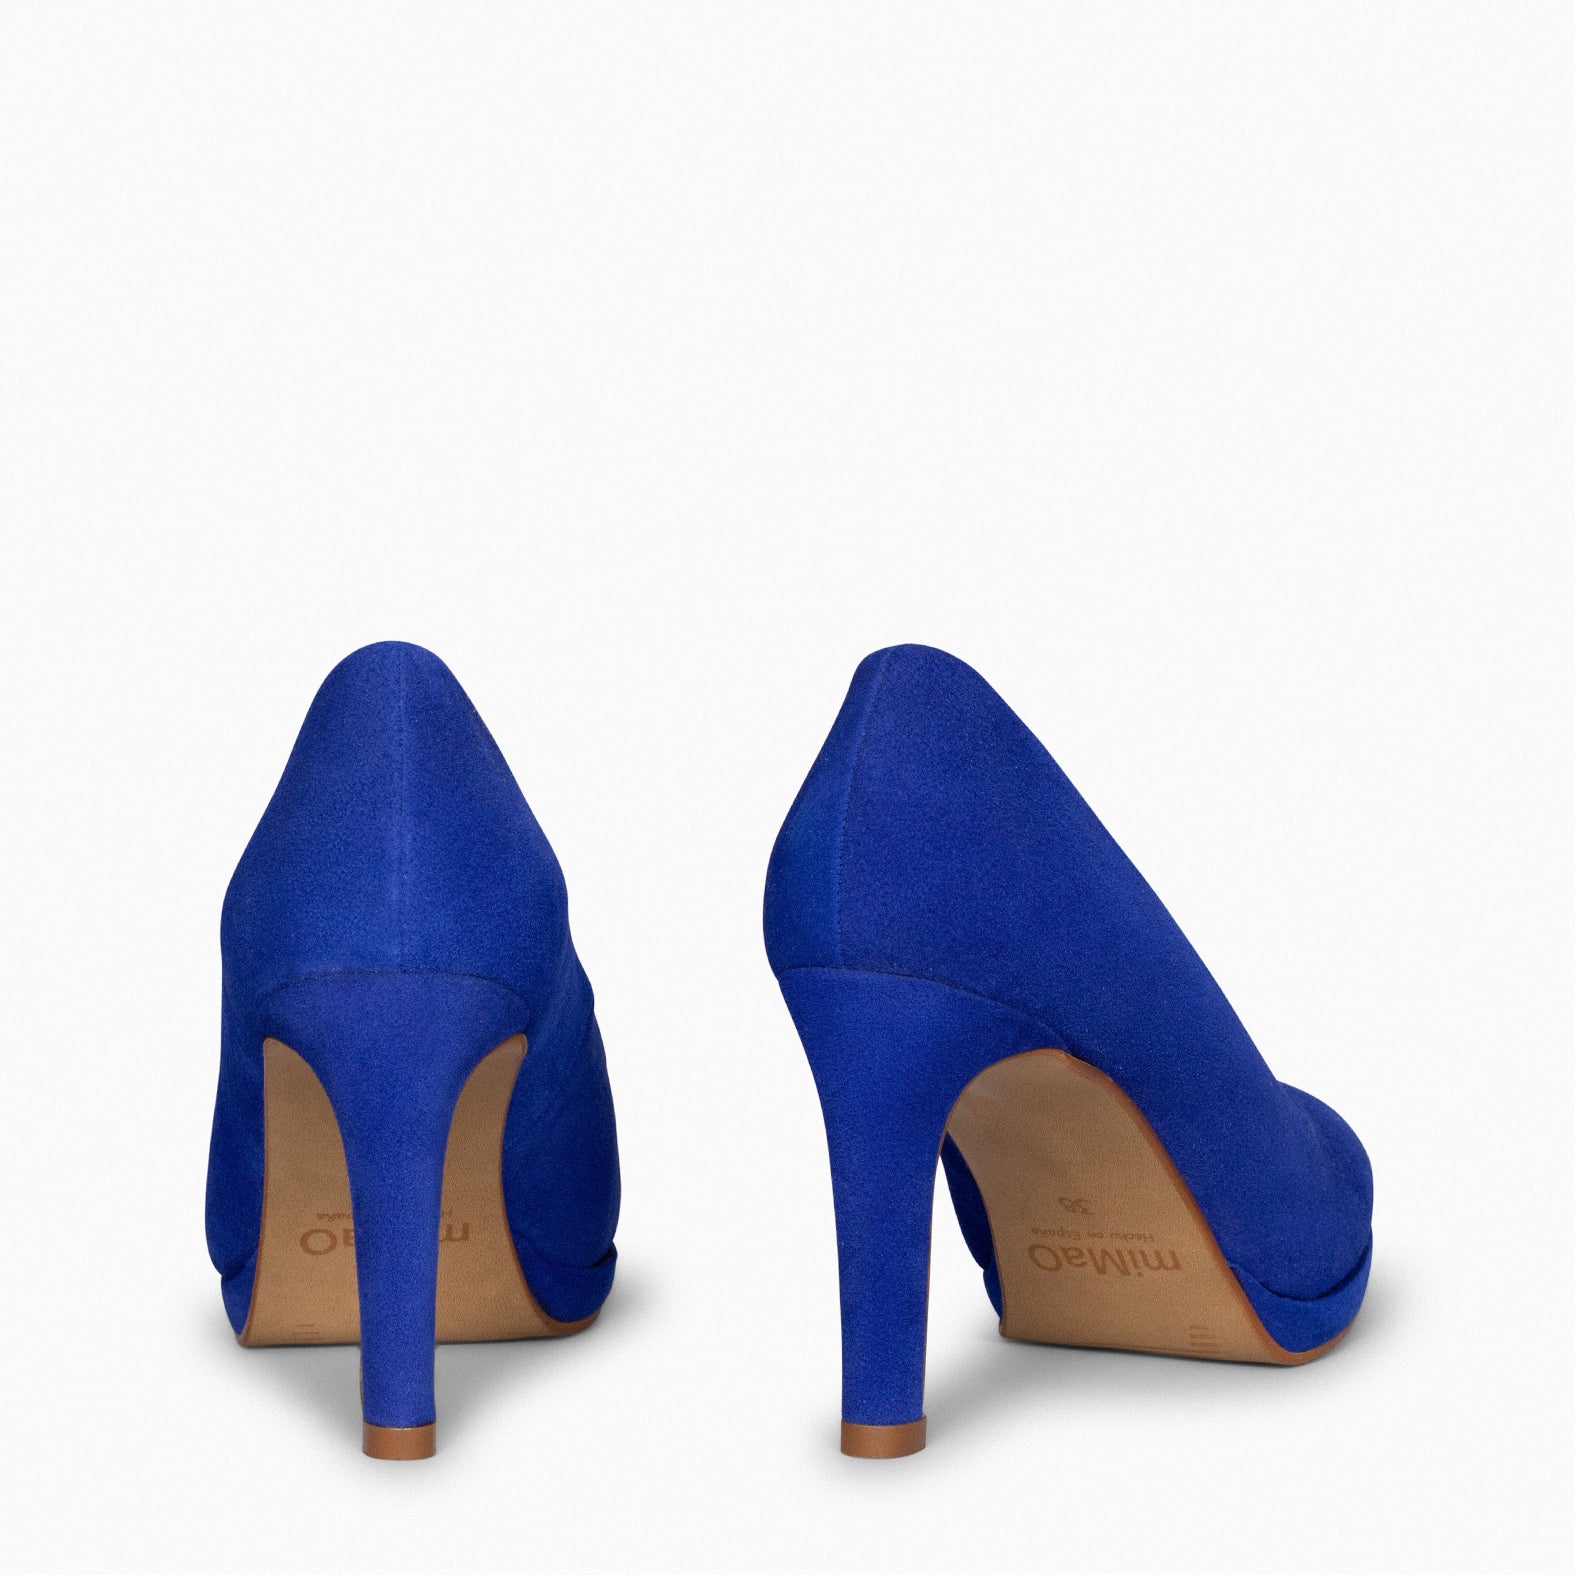 PLATFORM – ELECTRIC BLUE high heels with platform